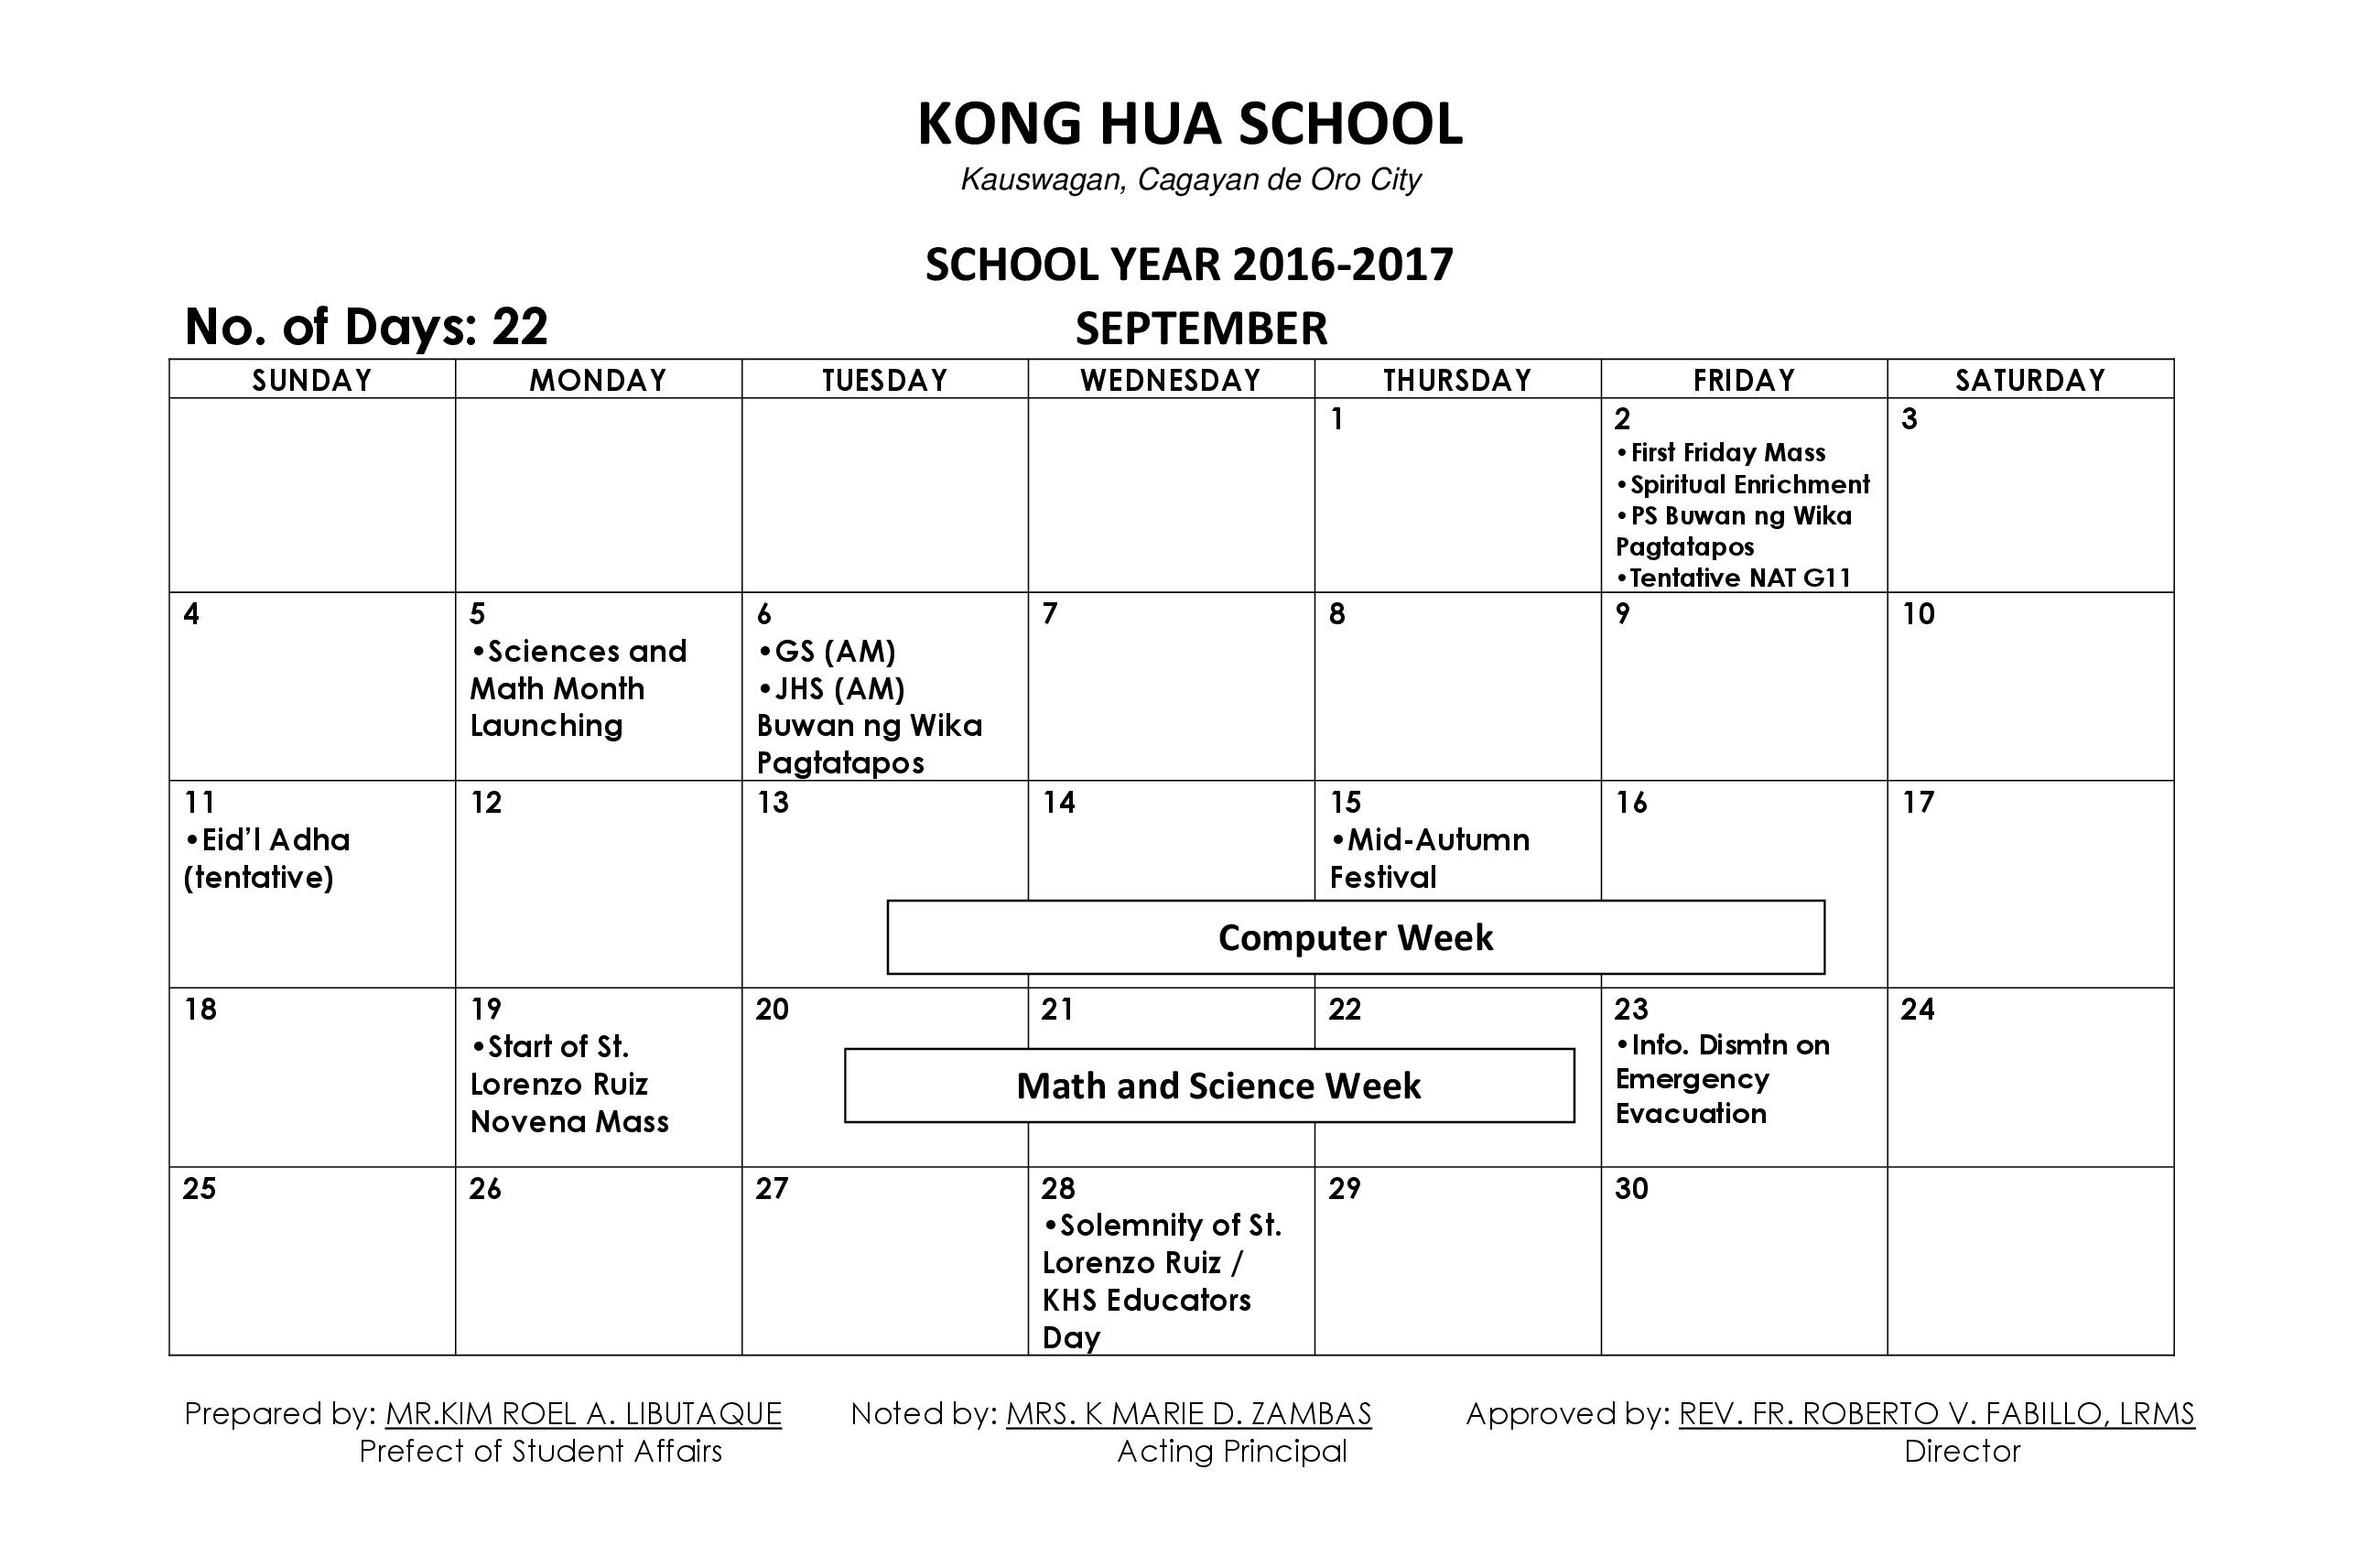 Calendar Of Activities School Year 2016 – 2017 | Kong Hua School Impressive School Calendar Of Activities